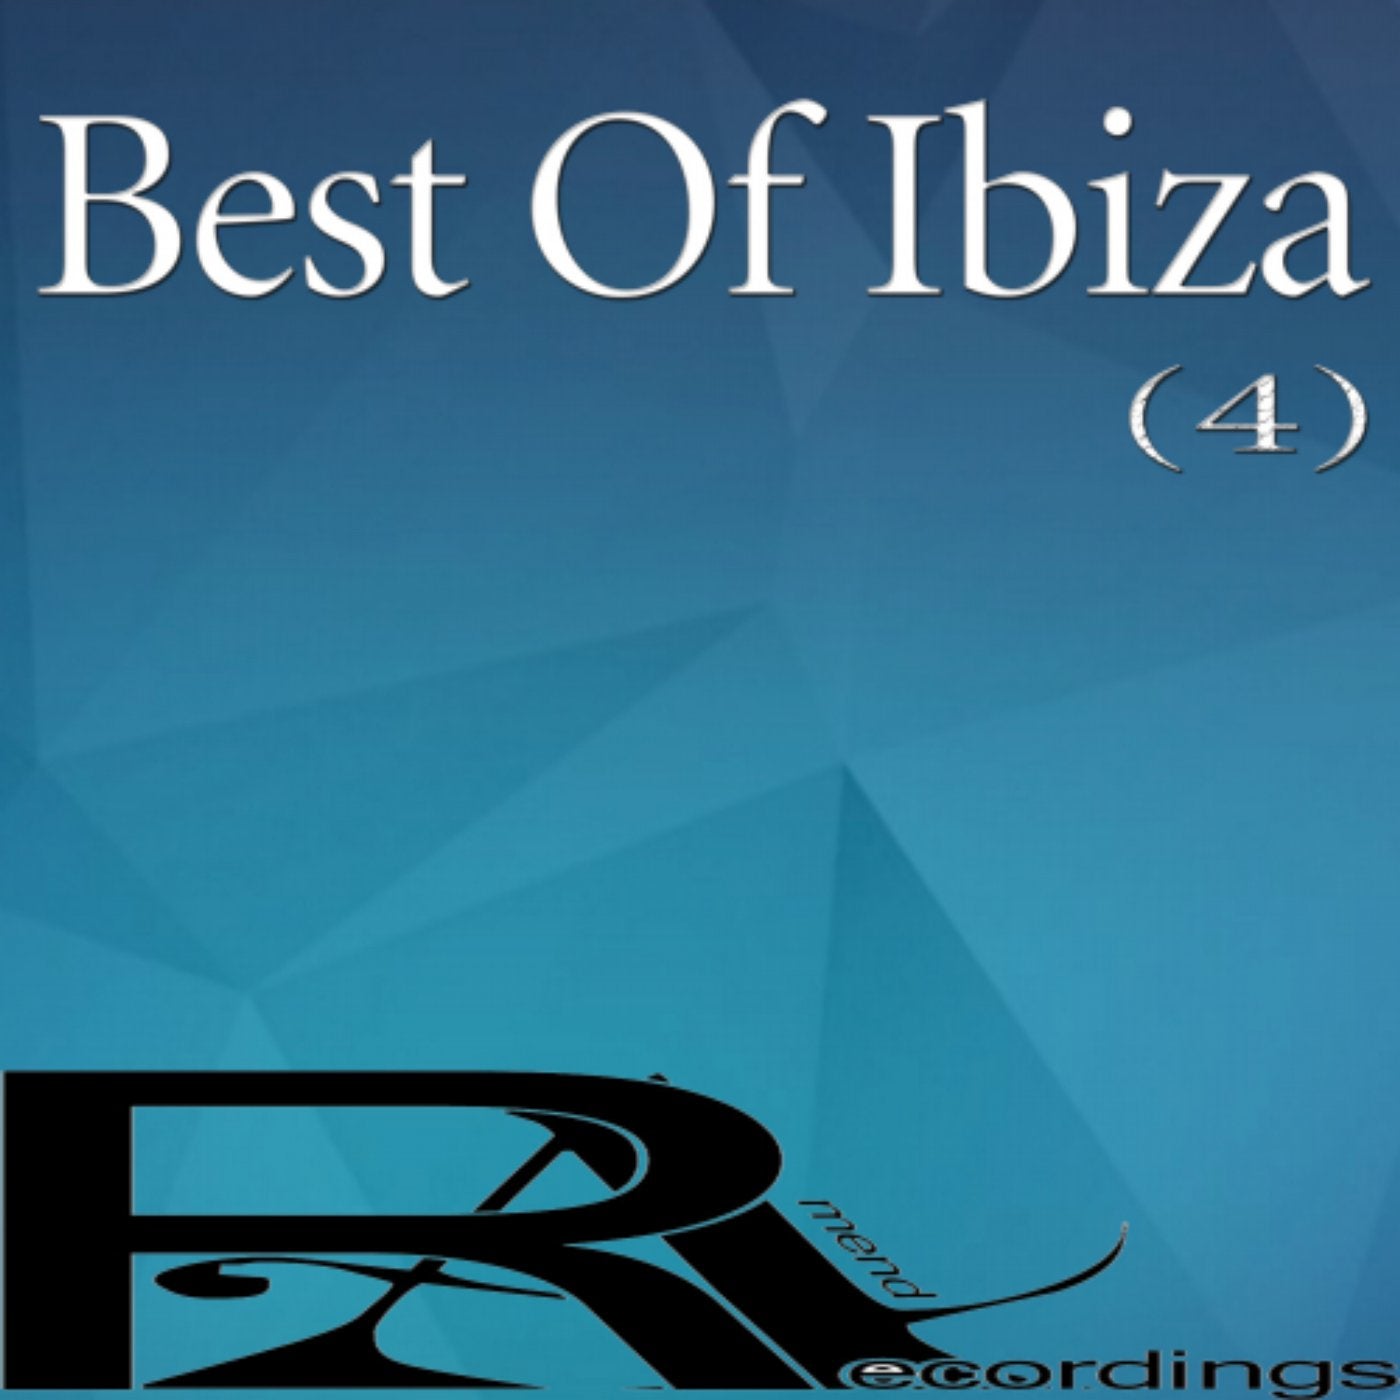 Best Of Ibiza (4)